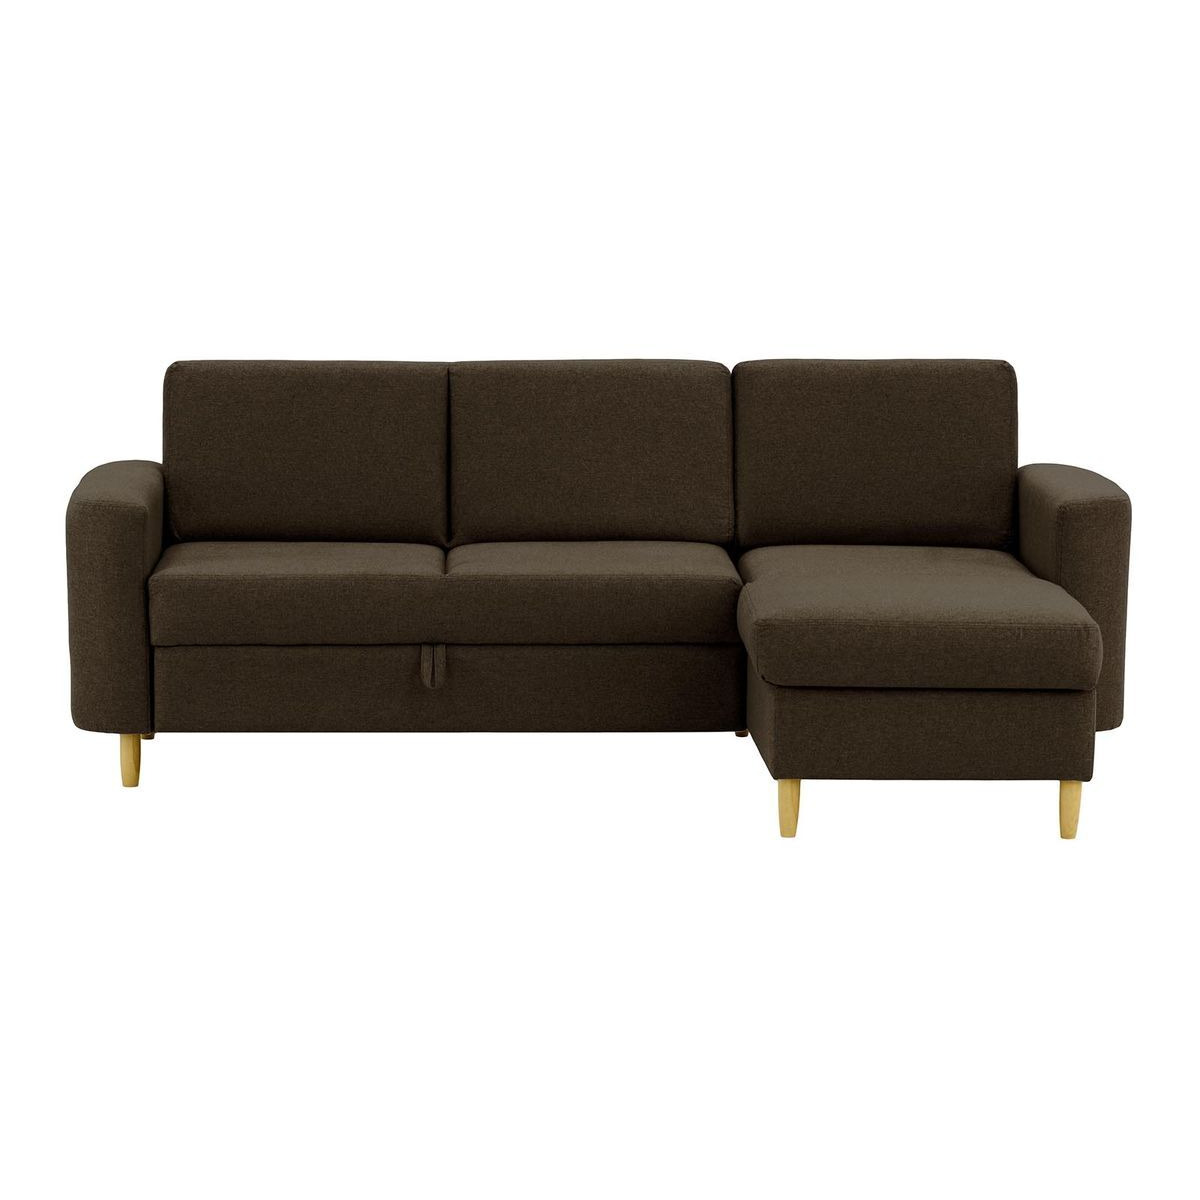 Elegance Corner Sofa Bed With Storage, brown - image 1